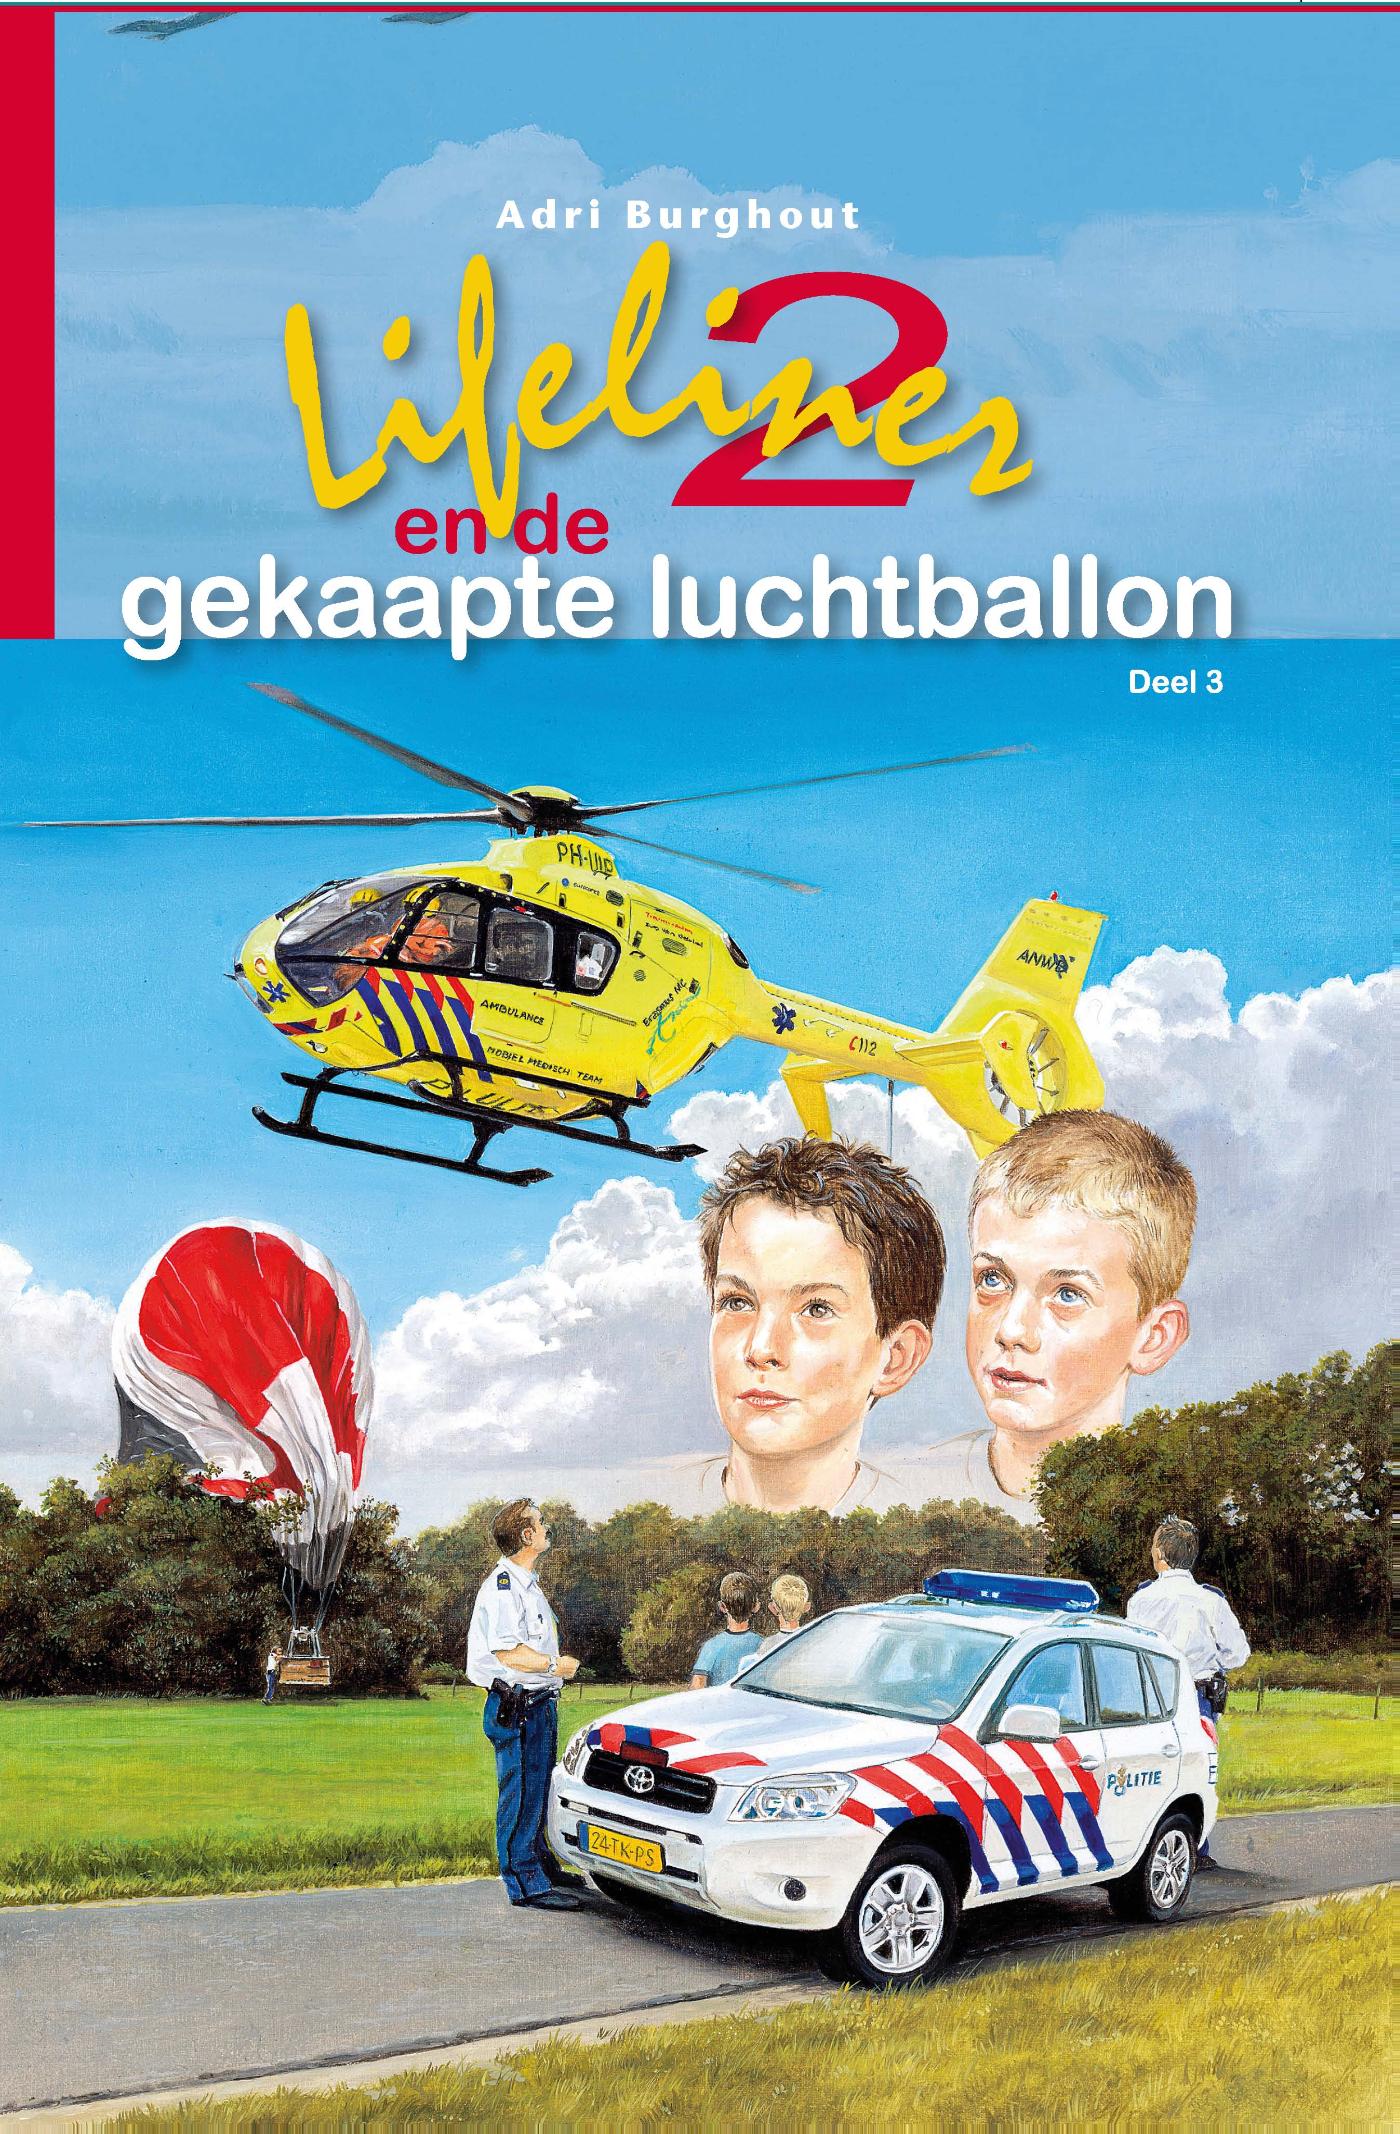 Lifeliner 2 en de gekaapte luchtballon (Ebook)